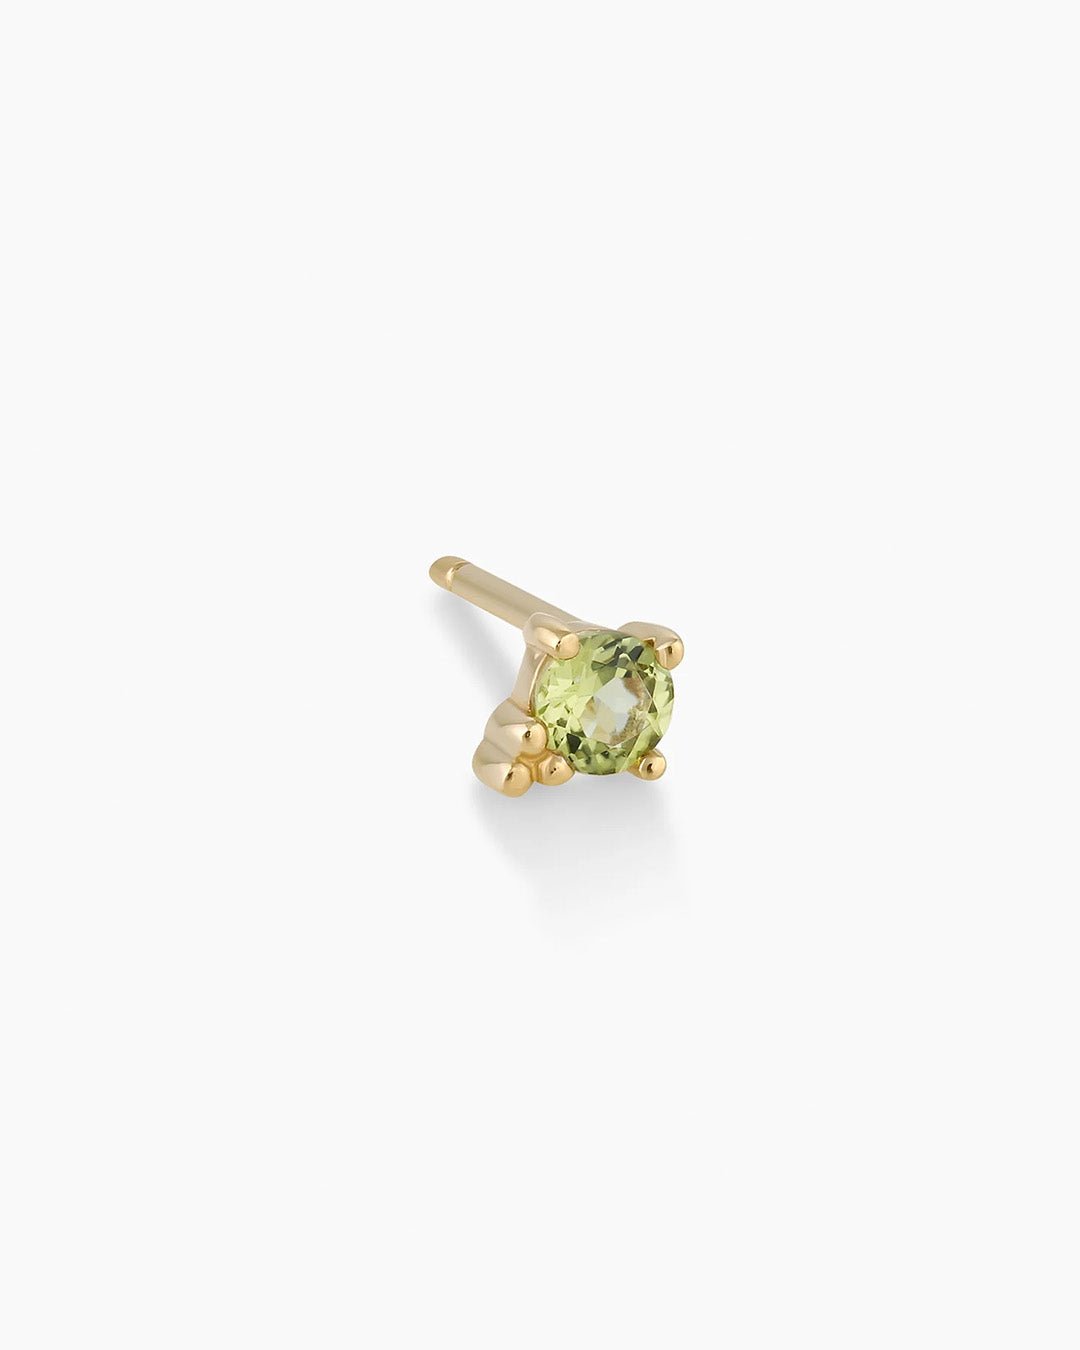 14k gold | gorjana jewelry | Peridot Trinity Stud | Green stud earring | August birthstone